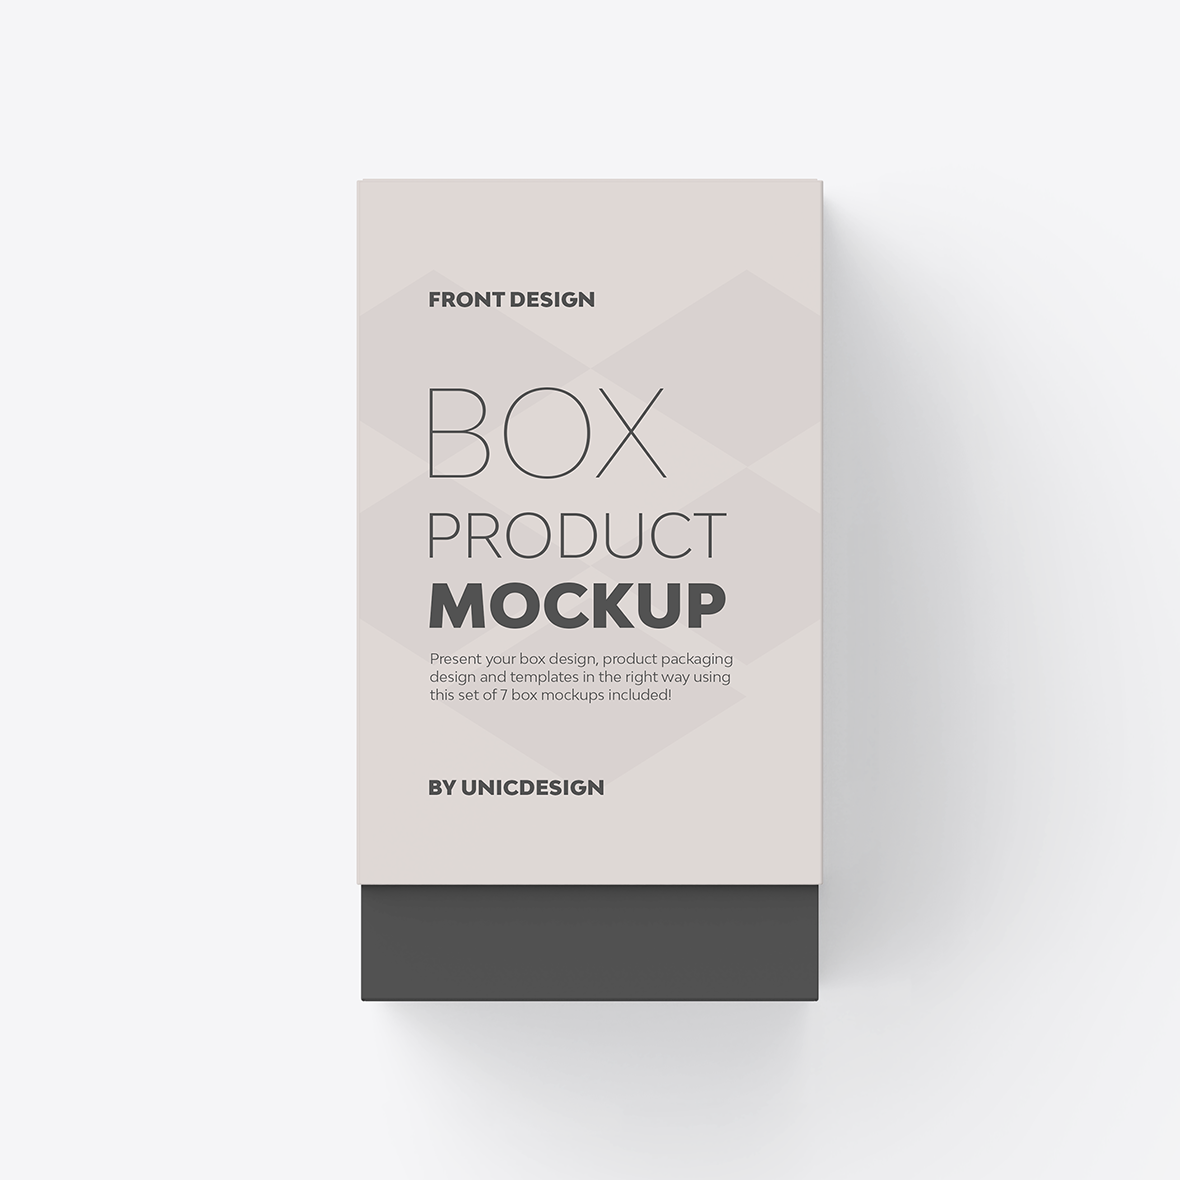 Box Mockup